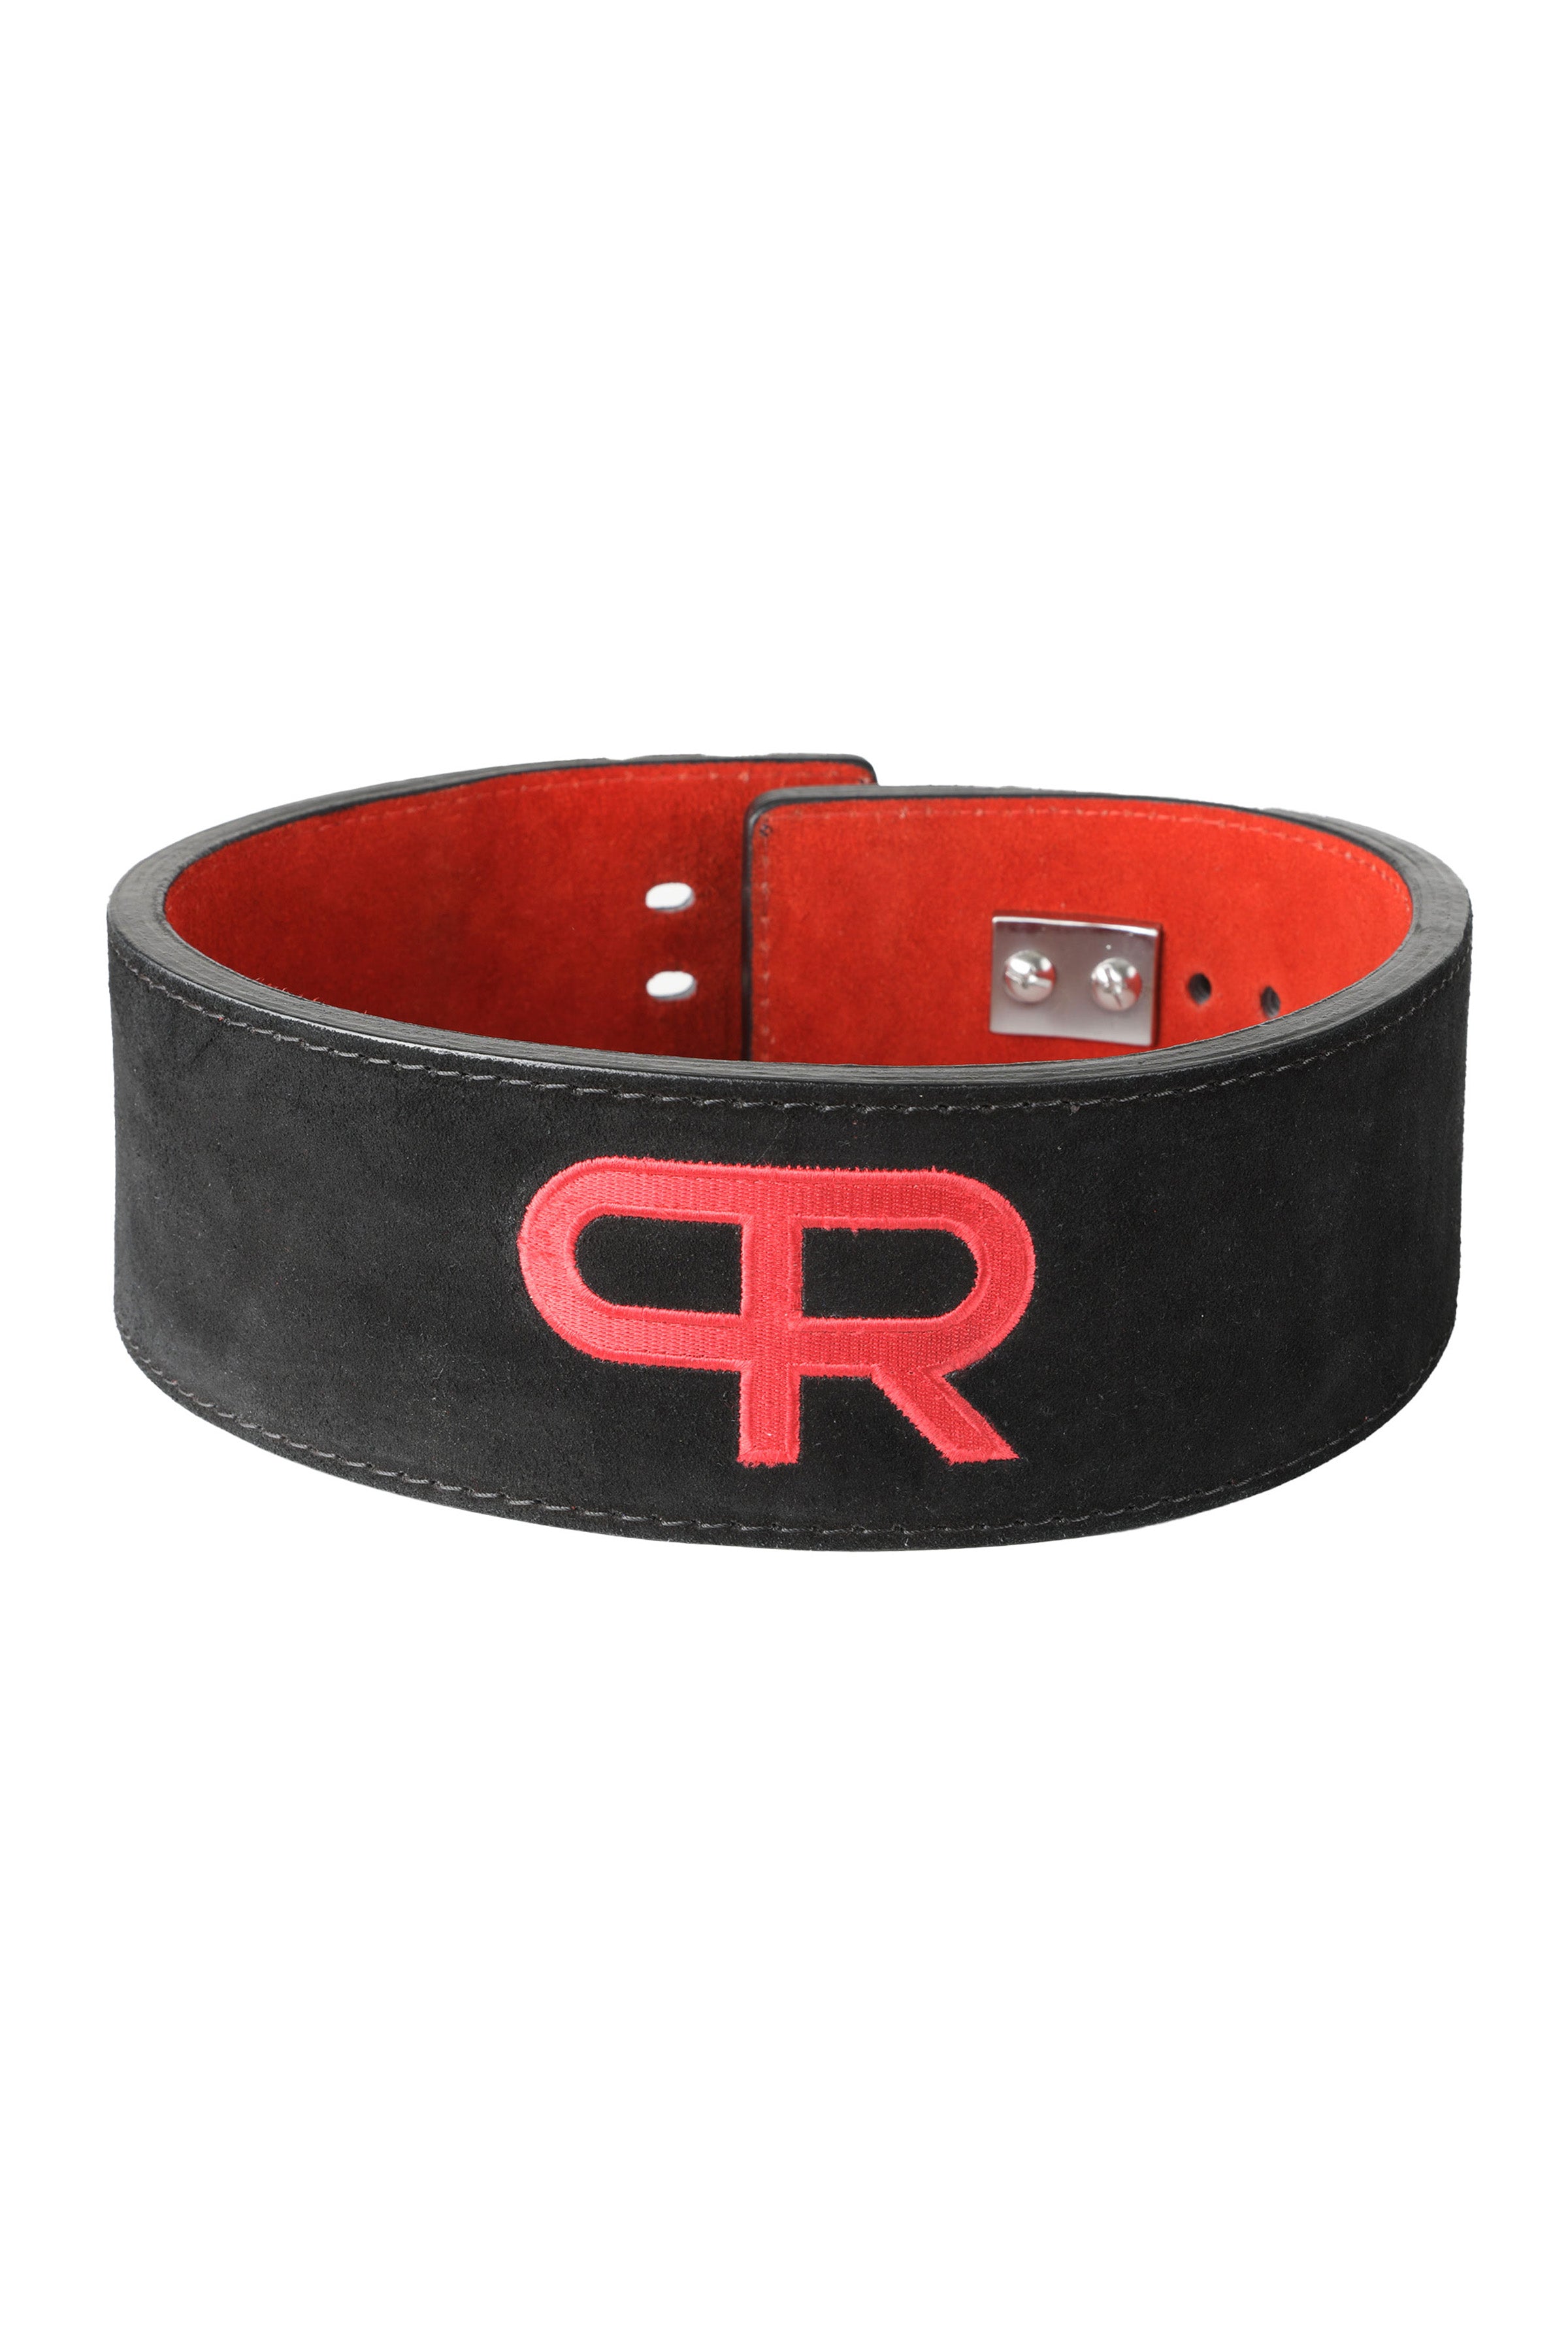 PR Powerlifting 13mm Belt w/ Lever Buckle - PR920 - Black/Red